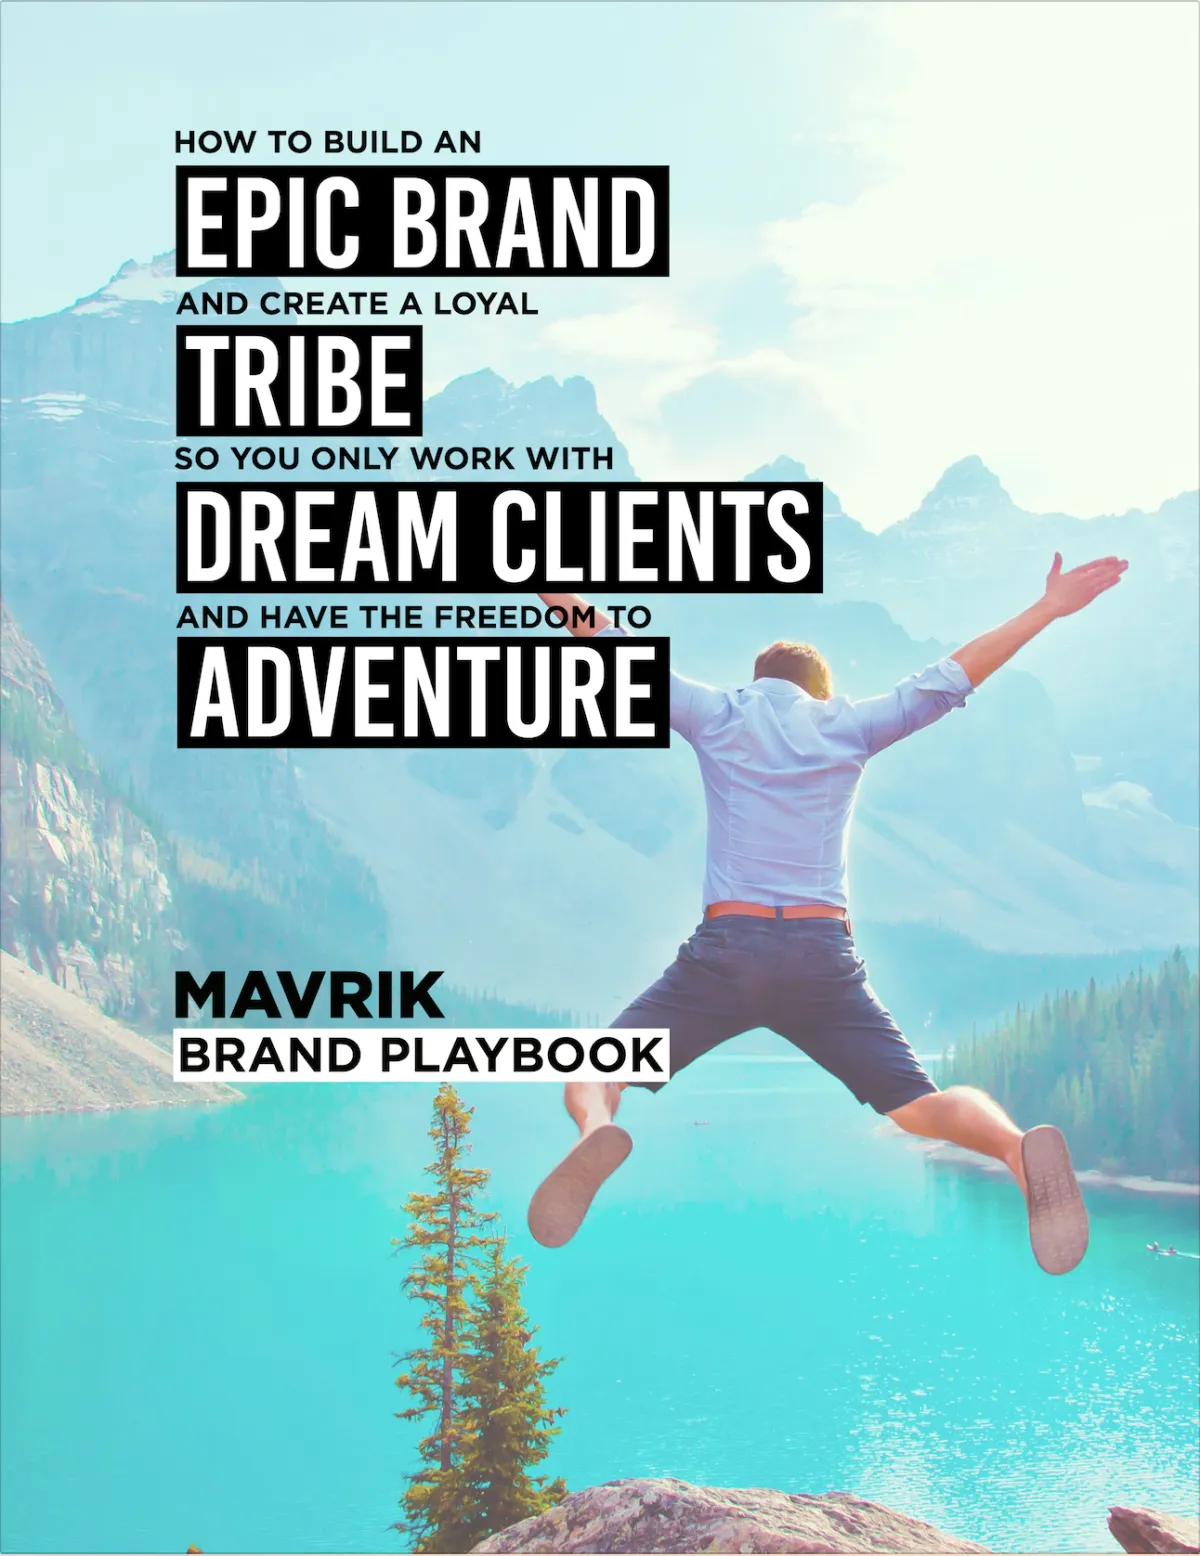 MAVRIK - Brand Playbook